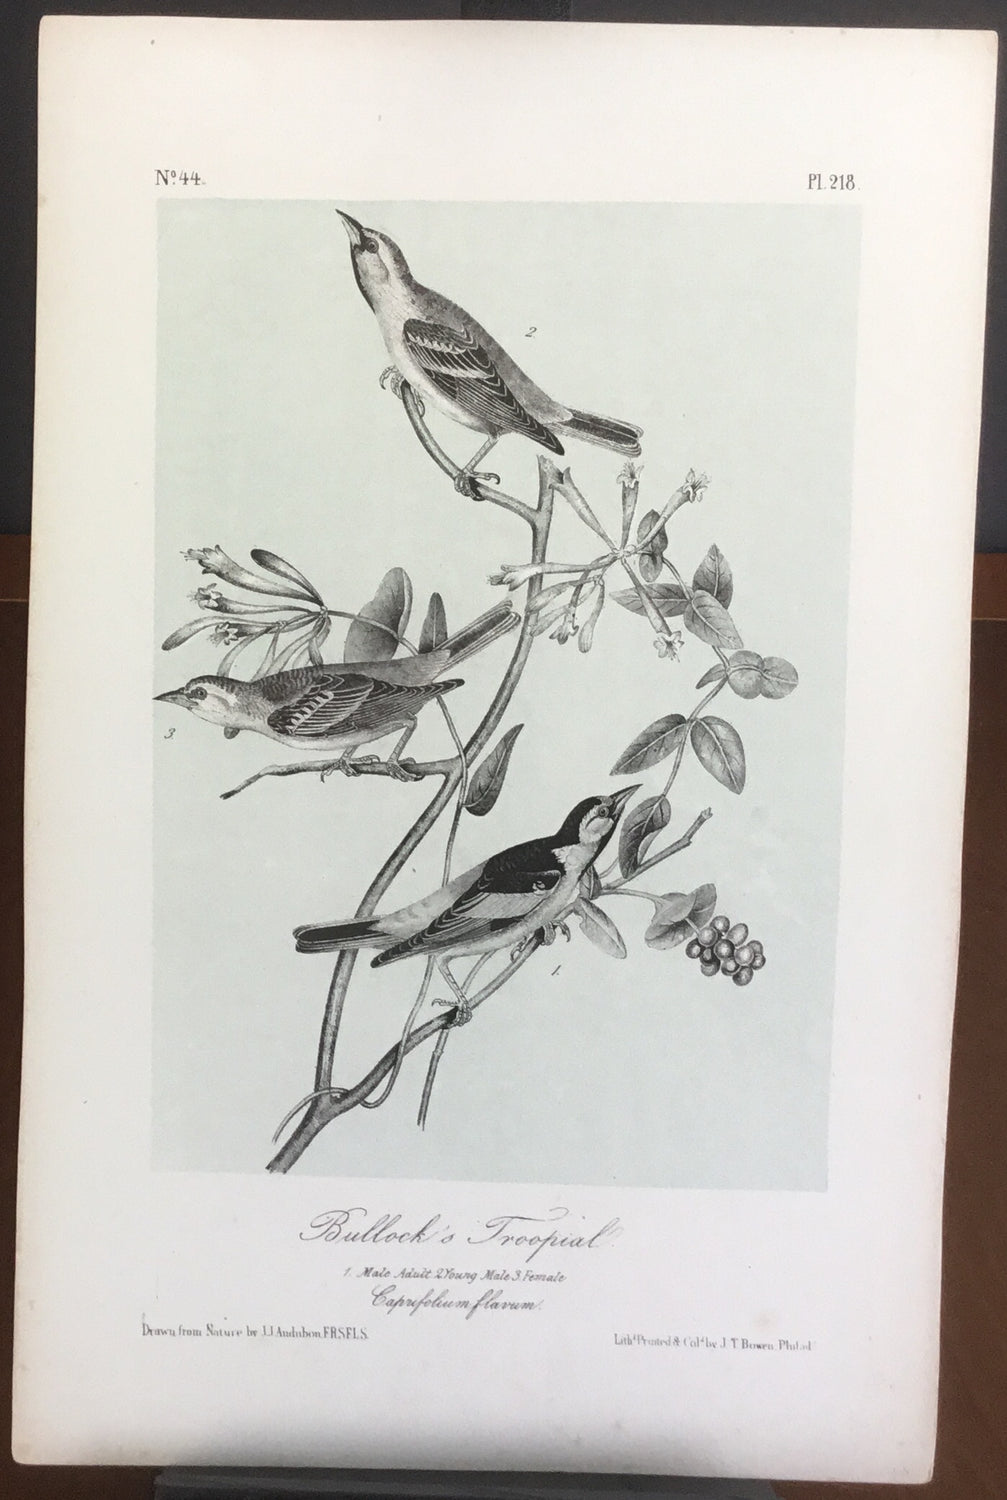 Audubon Octavo Bullock’s Troopial (2), plate 218, uncolored test sheet, 7 x 11